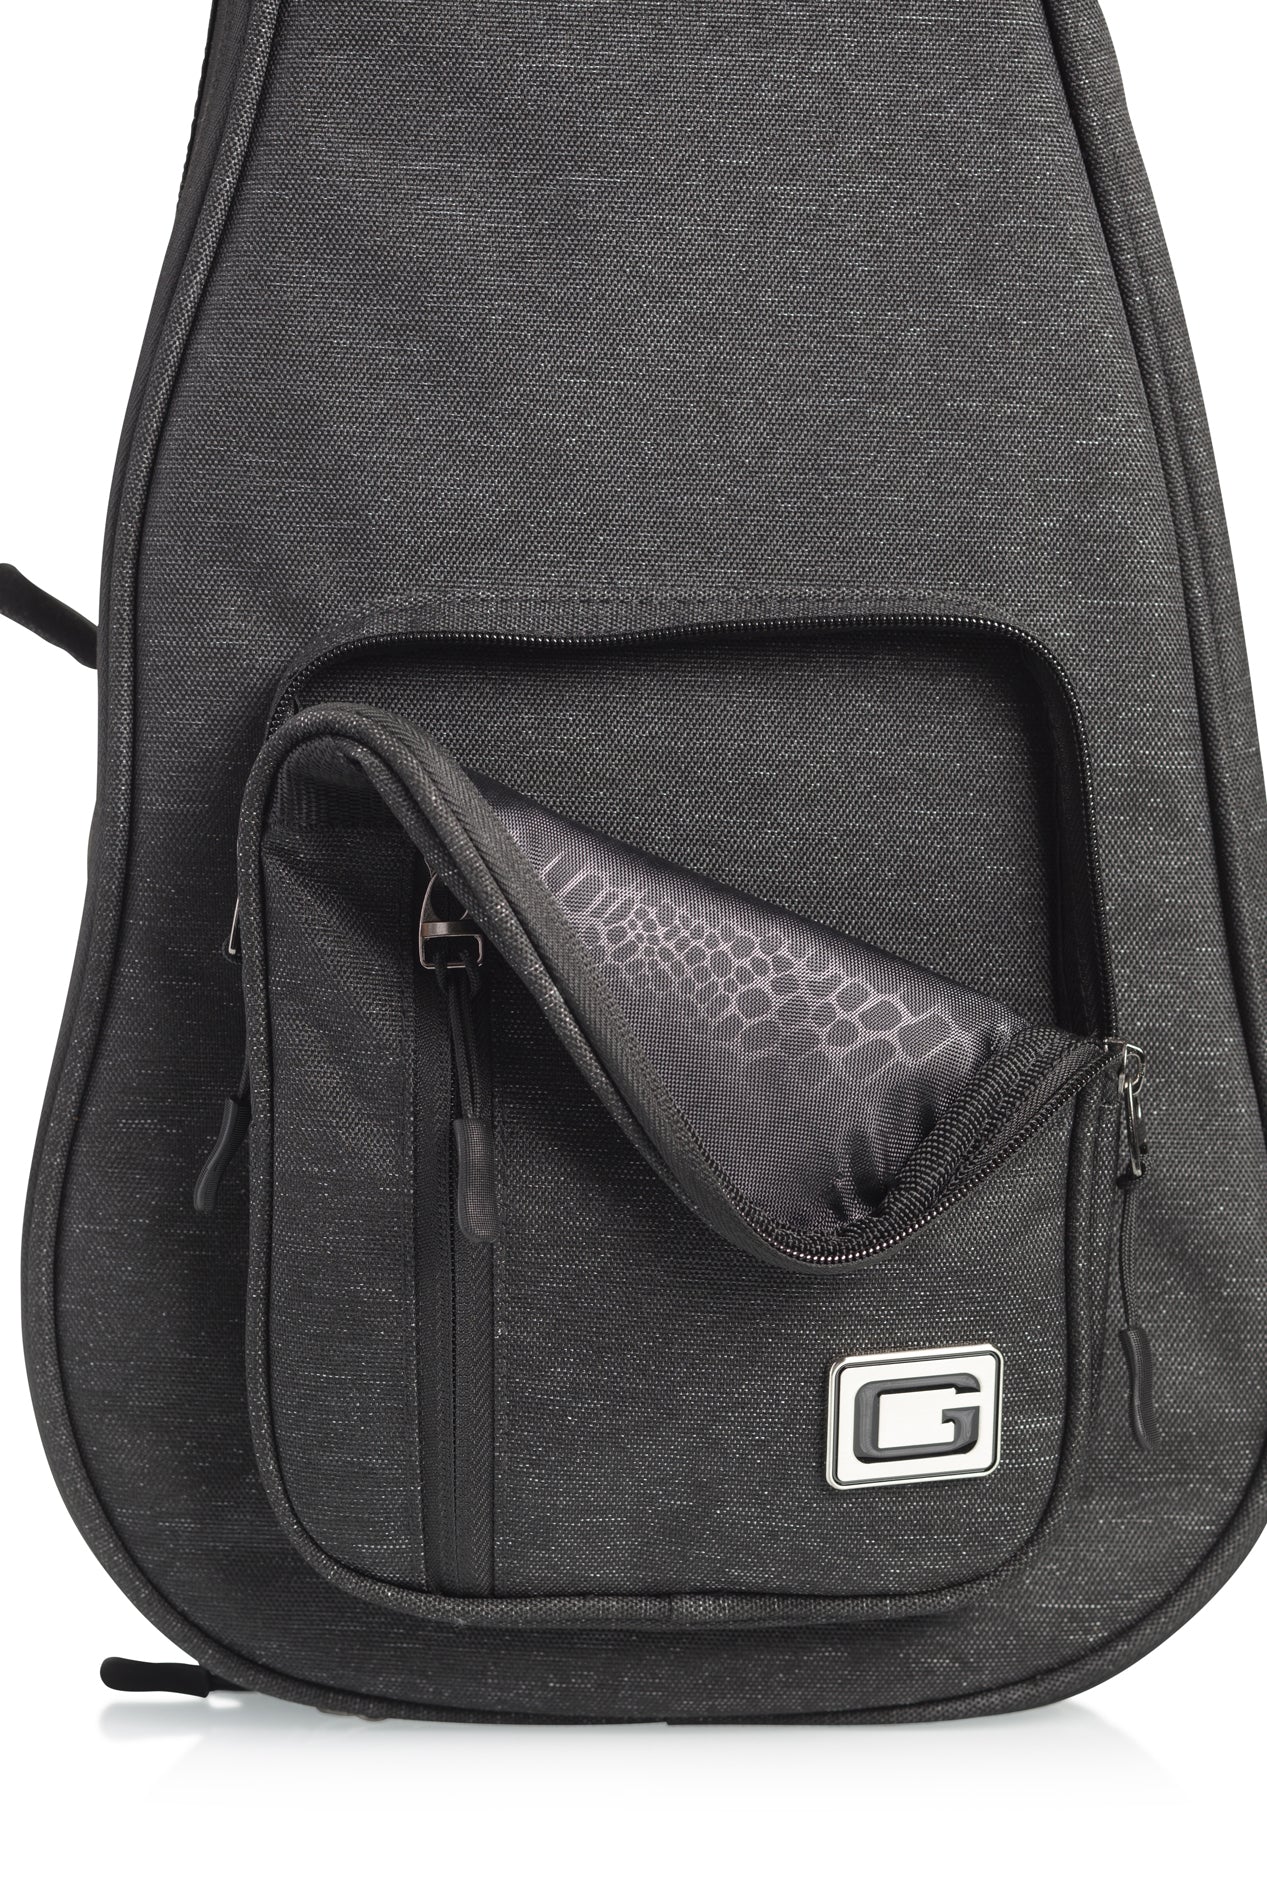 Gator Black Transit Bag – Soprano Ukulele - GT-UKE-SOP-BLK - Premium Ukulele Gigbag from Gator - Just $94.99! Shop now at Poppa's Music